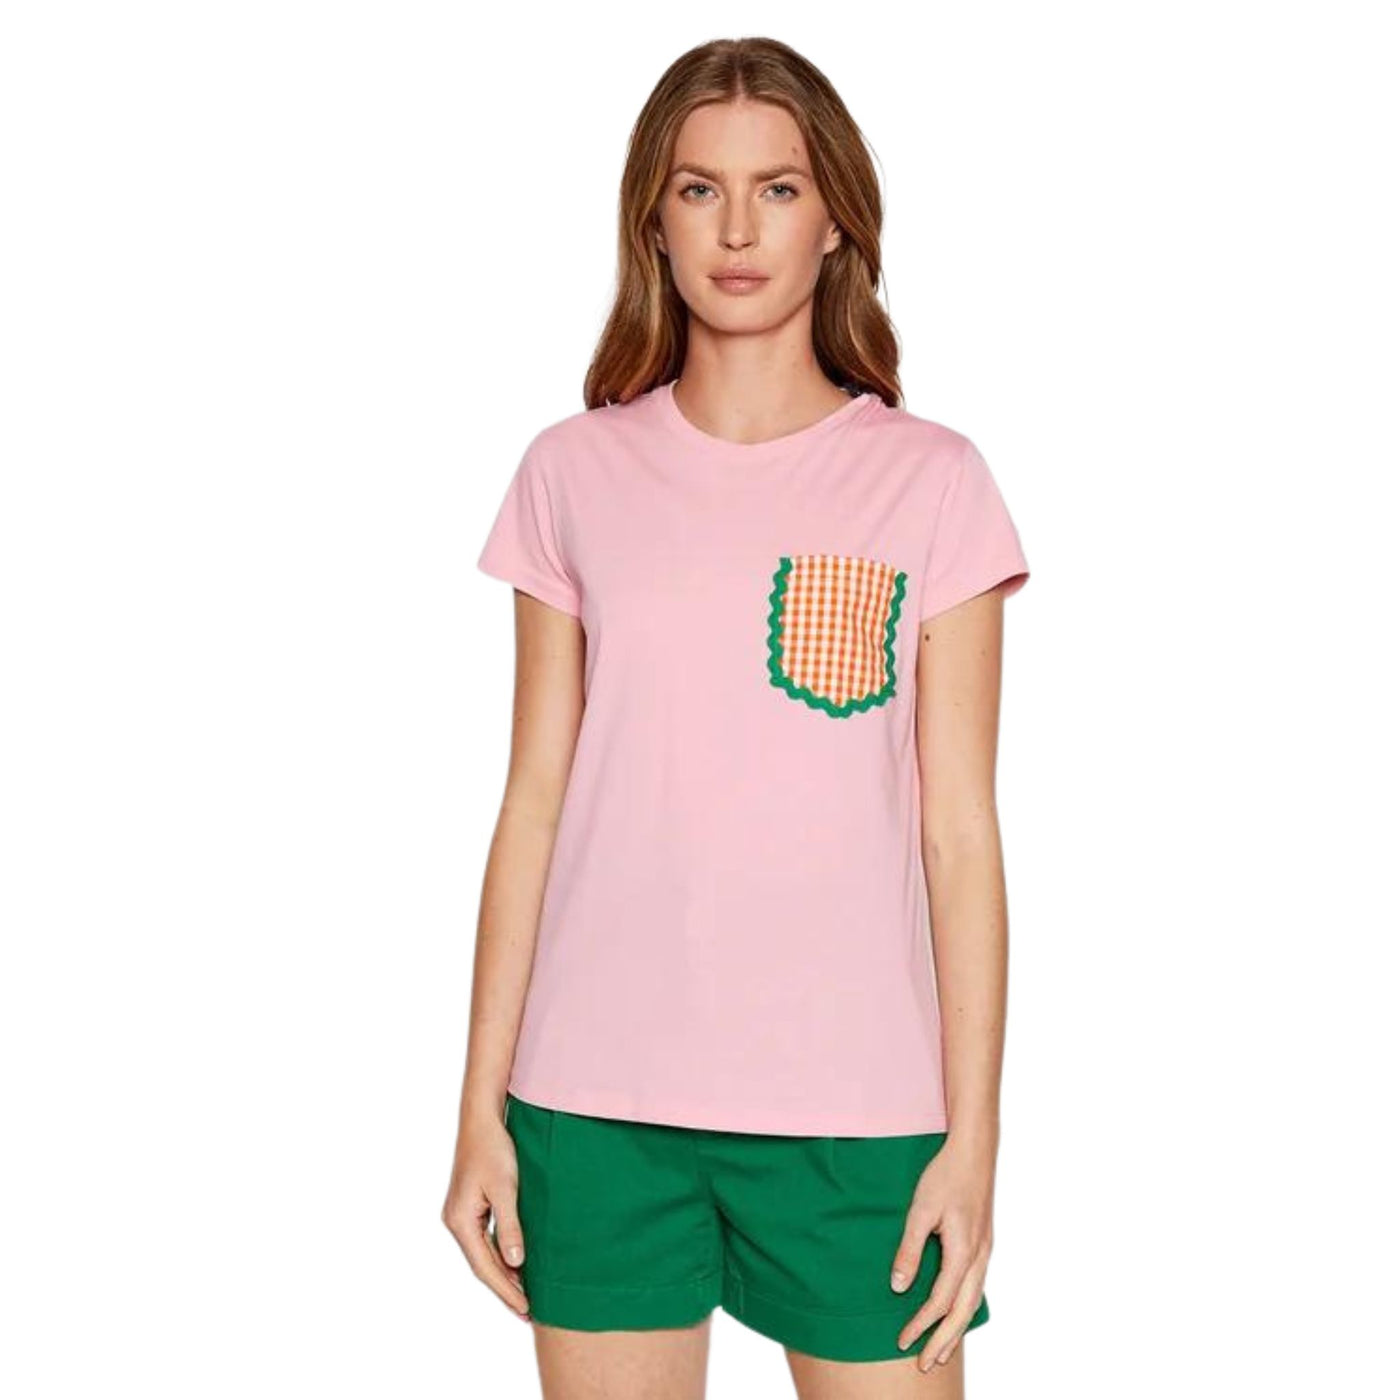 T-shirt da donna rosa firmata Saint Barth su modella vista frontale